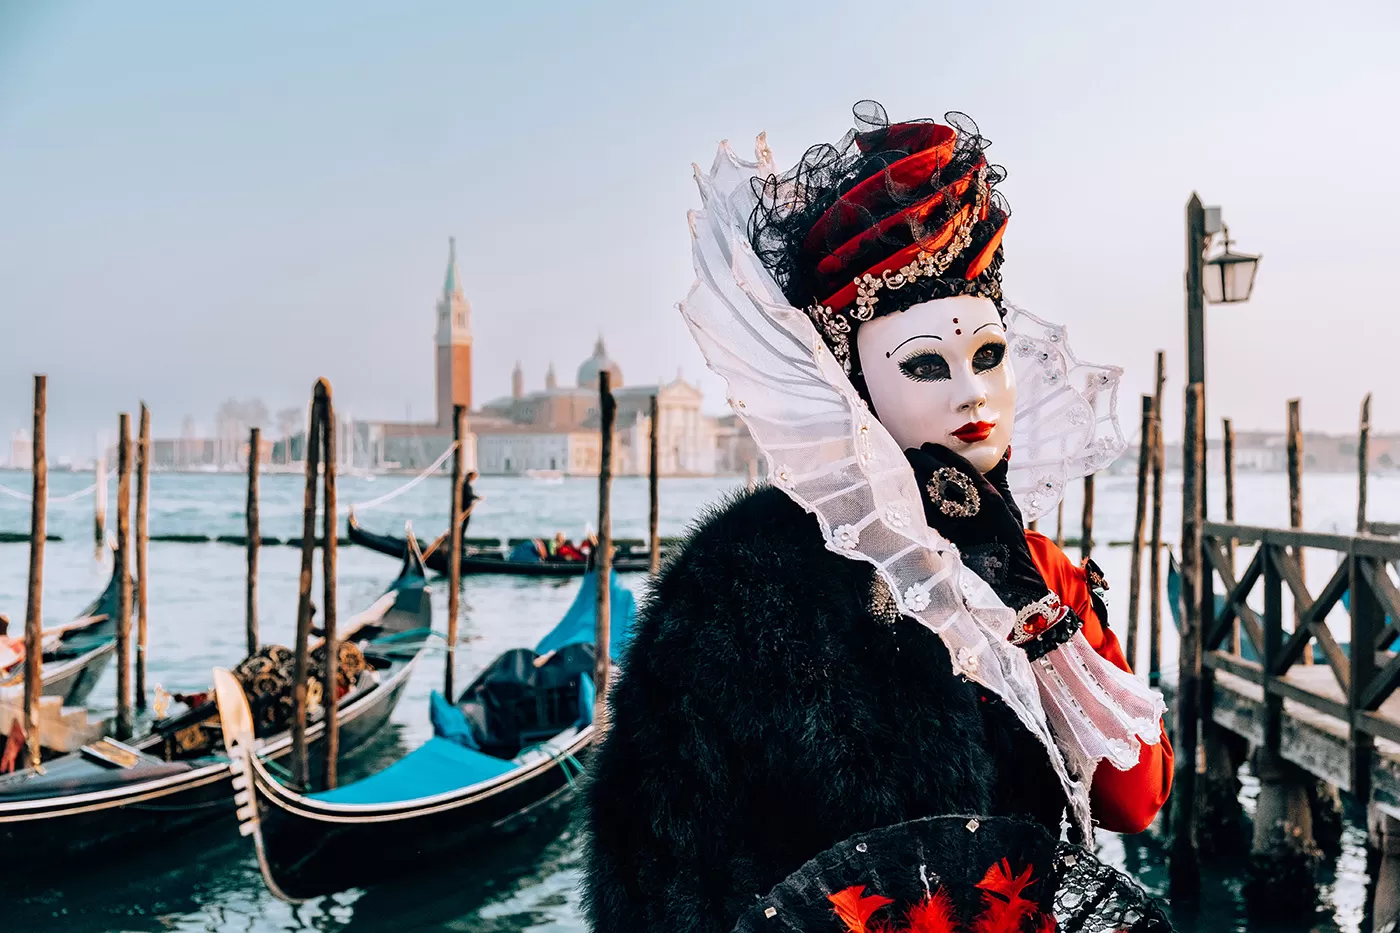 Carnival of Venice, Italy - The Ultimate Guide - Elaborare costume with gondola